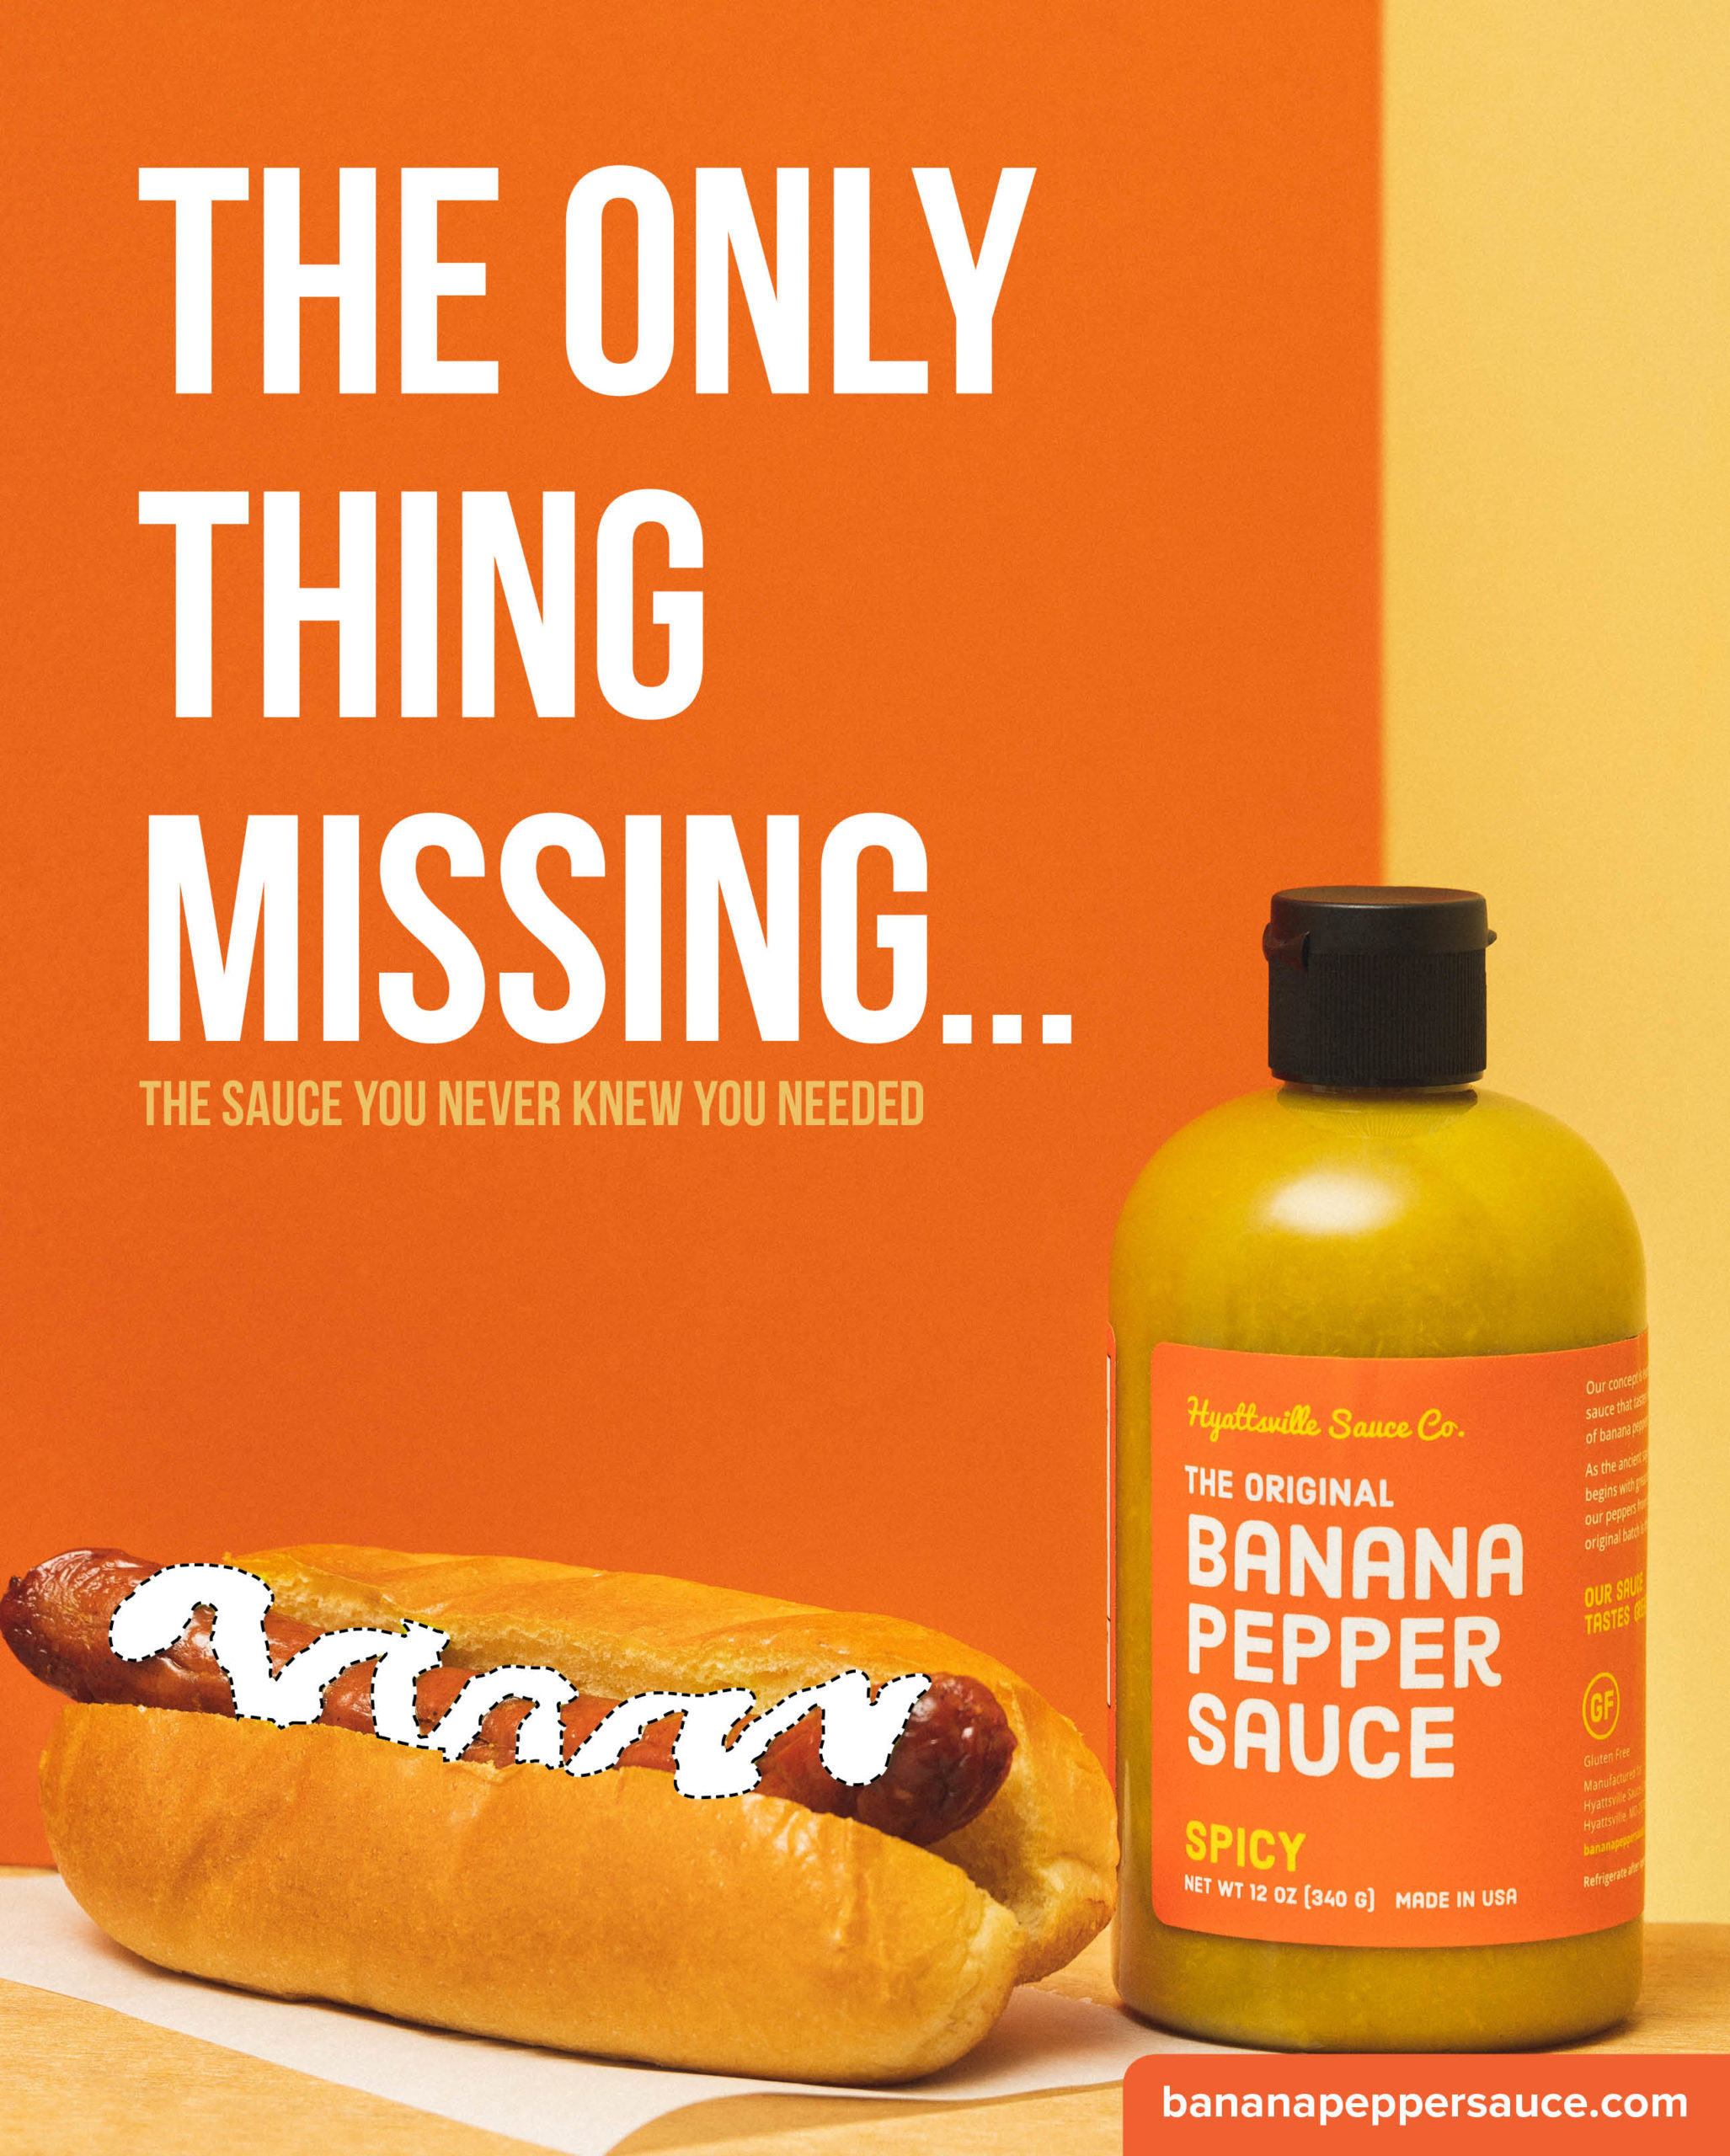 Hyattsville Sauce Company The Original Banana Pepper Sauce bottle Spicy flavor next to hotdog graphic with slogan and website address